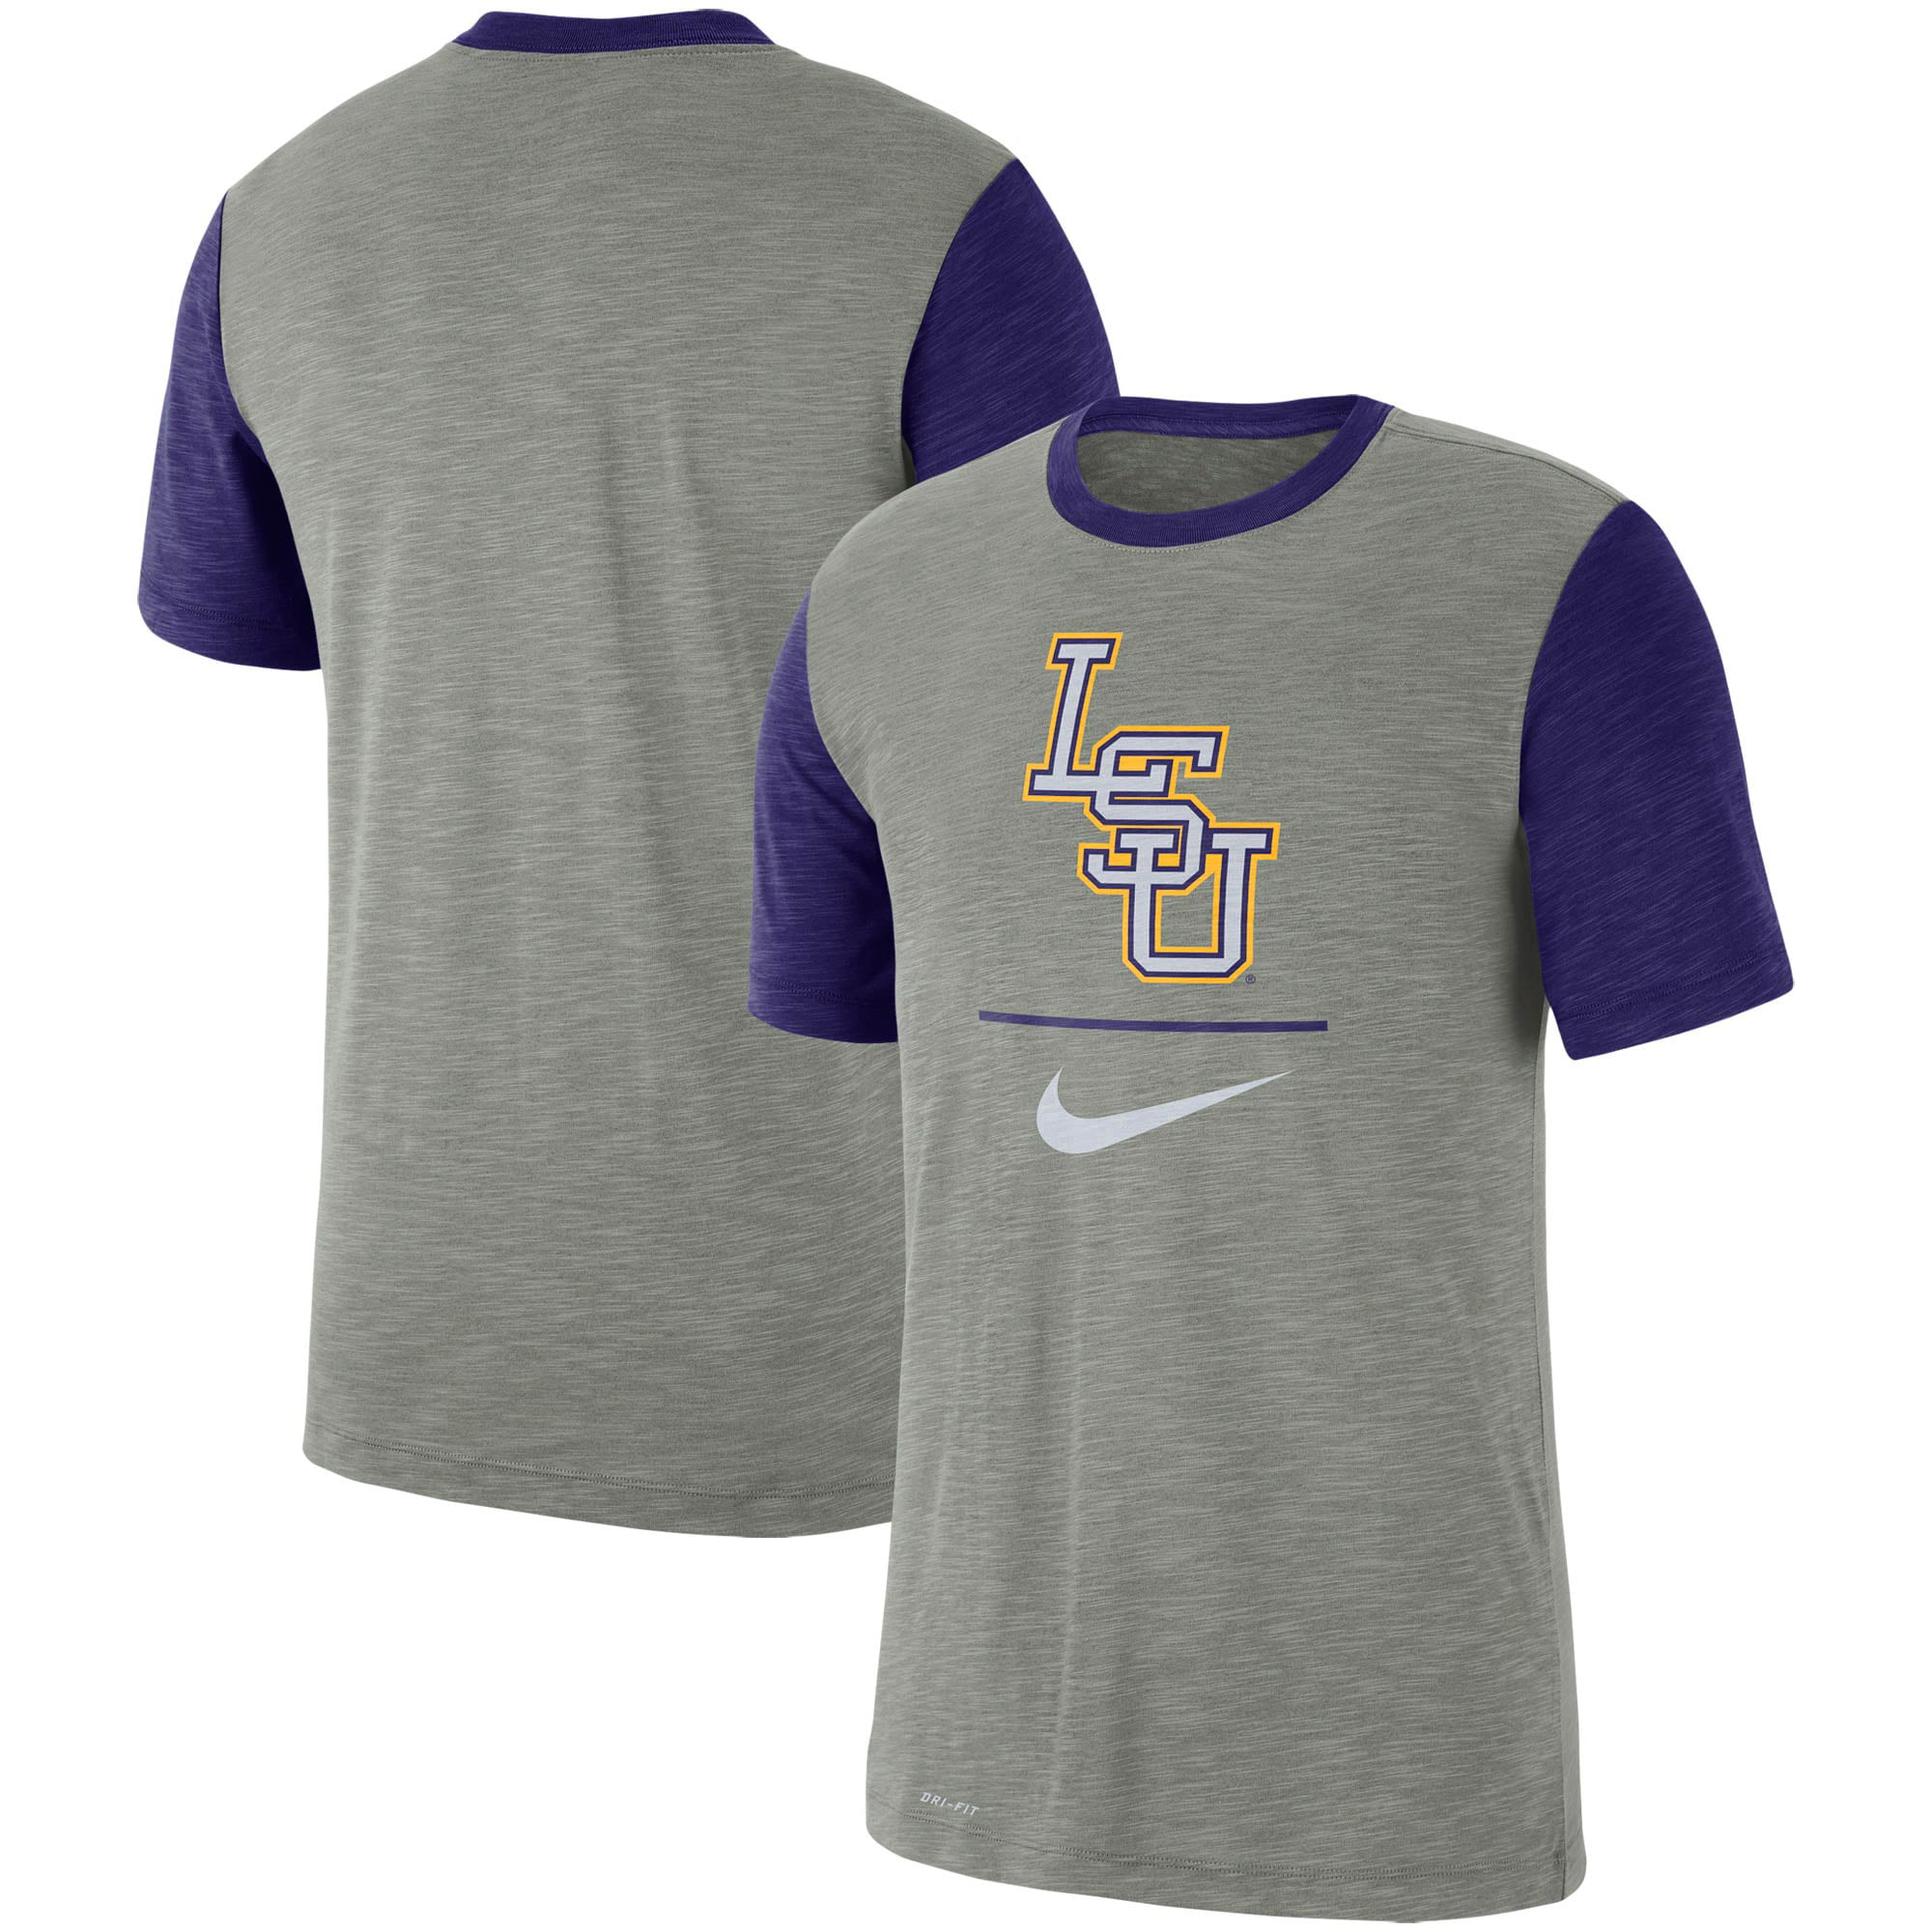 LSU Tigers Nike Baseball Performance Cotton Slub T-Shirt - Heathered ...